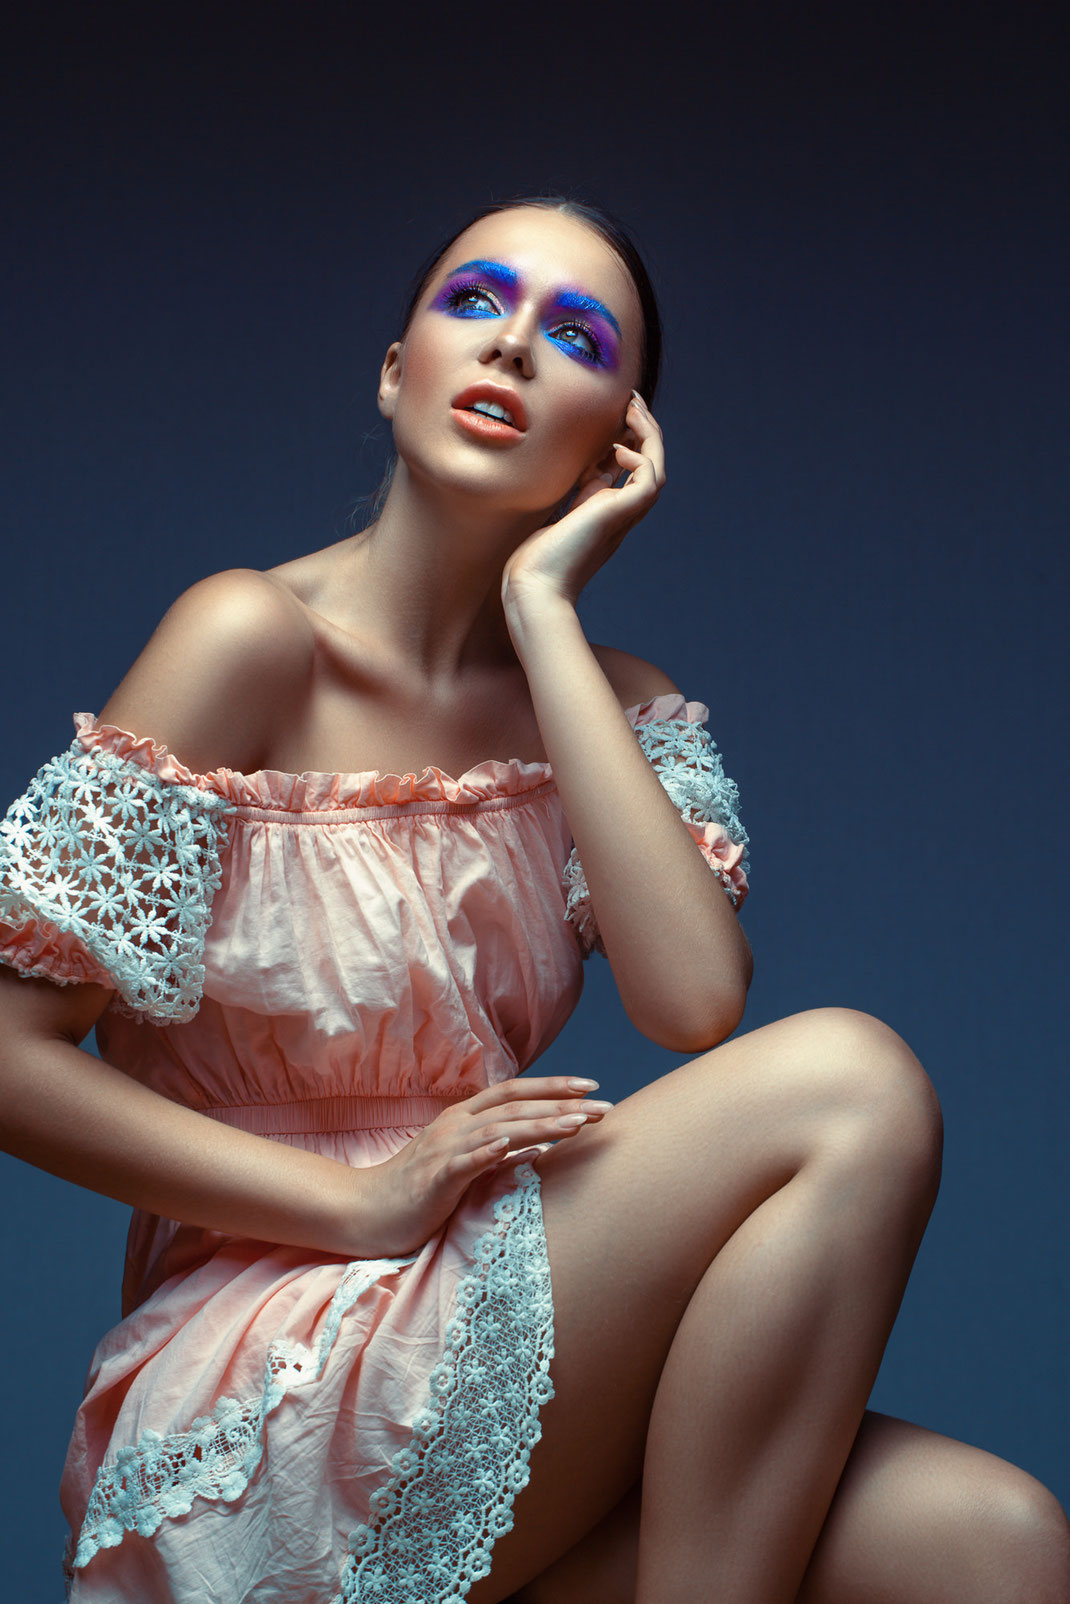 Olga´s  Dress - Olga - Markus Hertzsch - Model - Girl - Portrait - Sublime - Fashion - Face -  Body - Nude - Makeup - Visa - Skin - Look